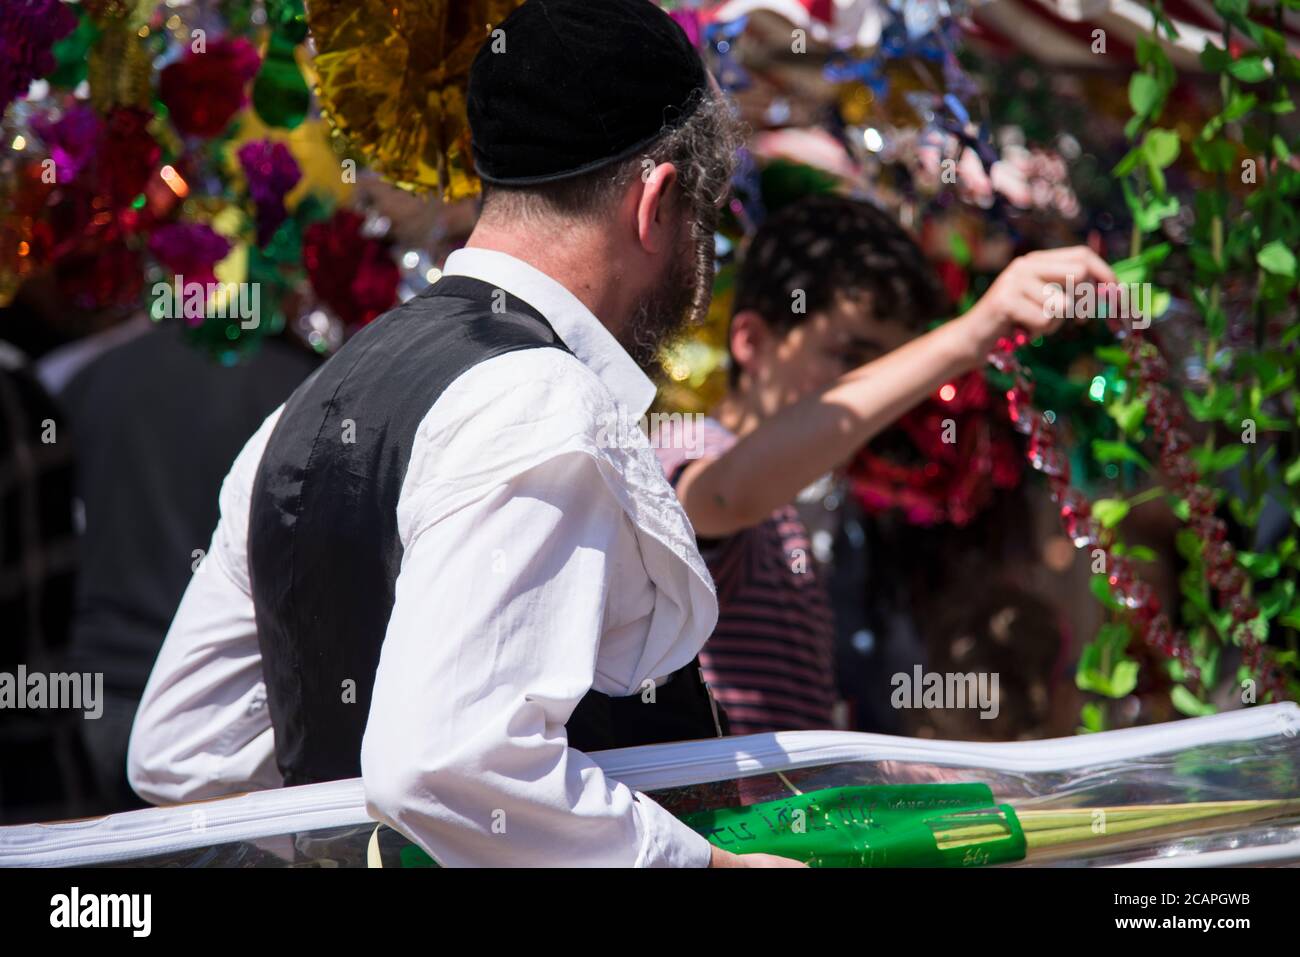 Jewish man wearing kippah. Sukkot's four species festival. Palm branch. Sukkah decorations Stock Photo